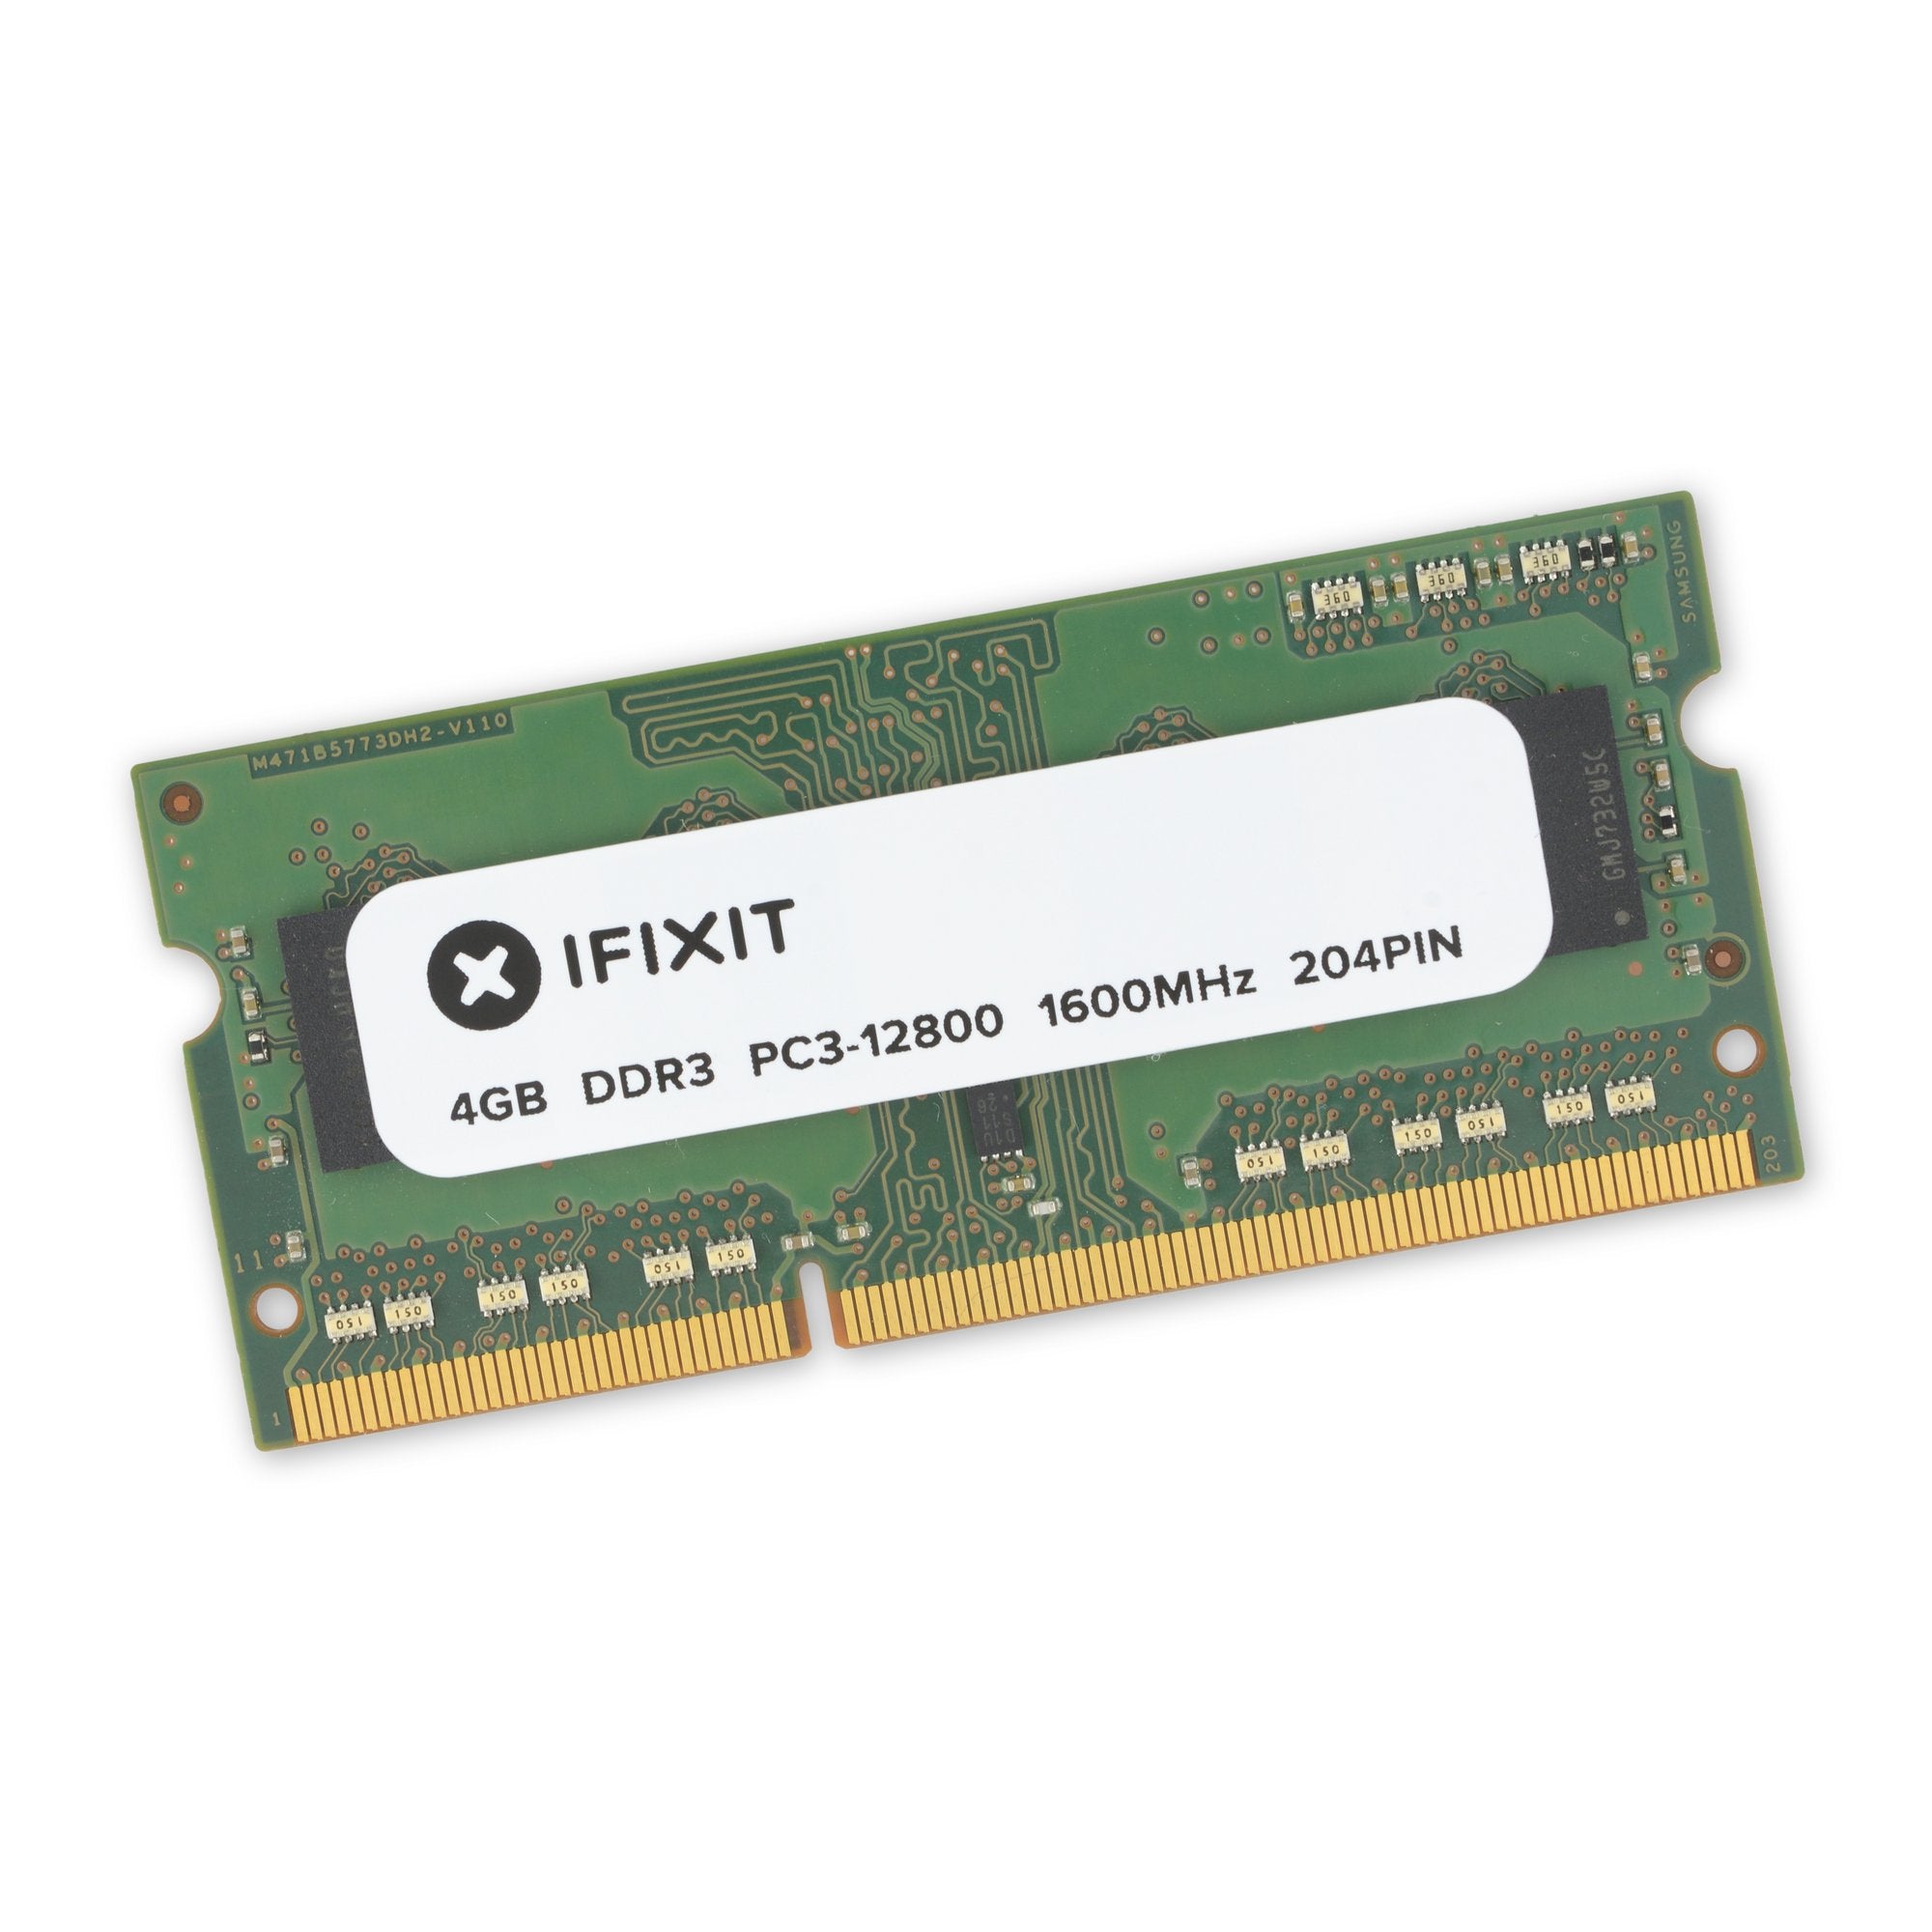 ADATA DDR4 4GB 1Rx16 PC4-2400T Laptop RAM Memory Module - ChipBay